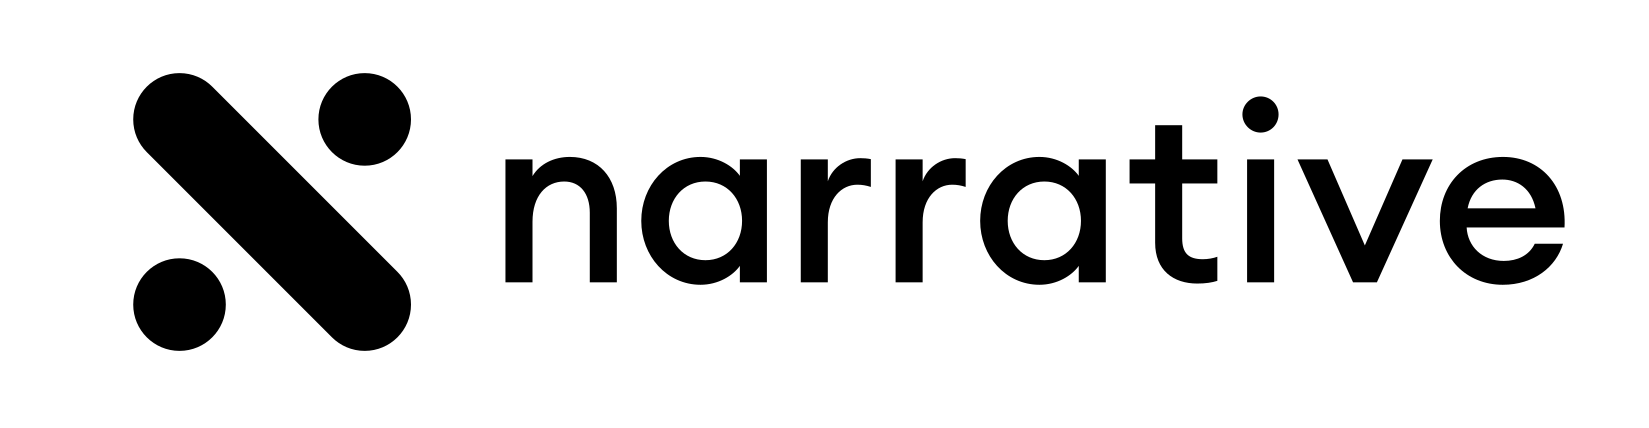 narrative logo